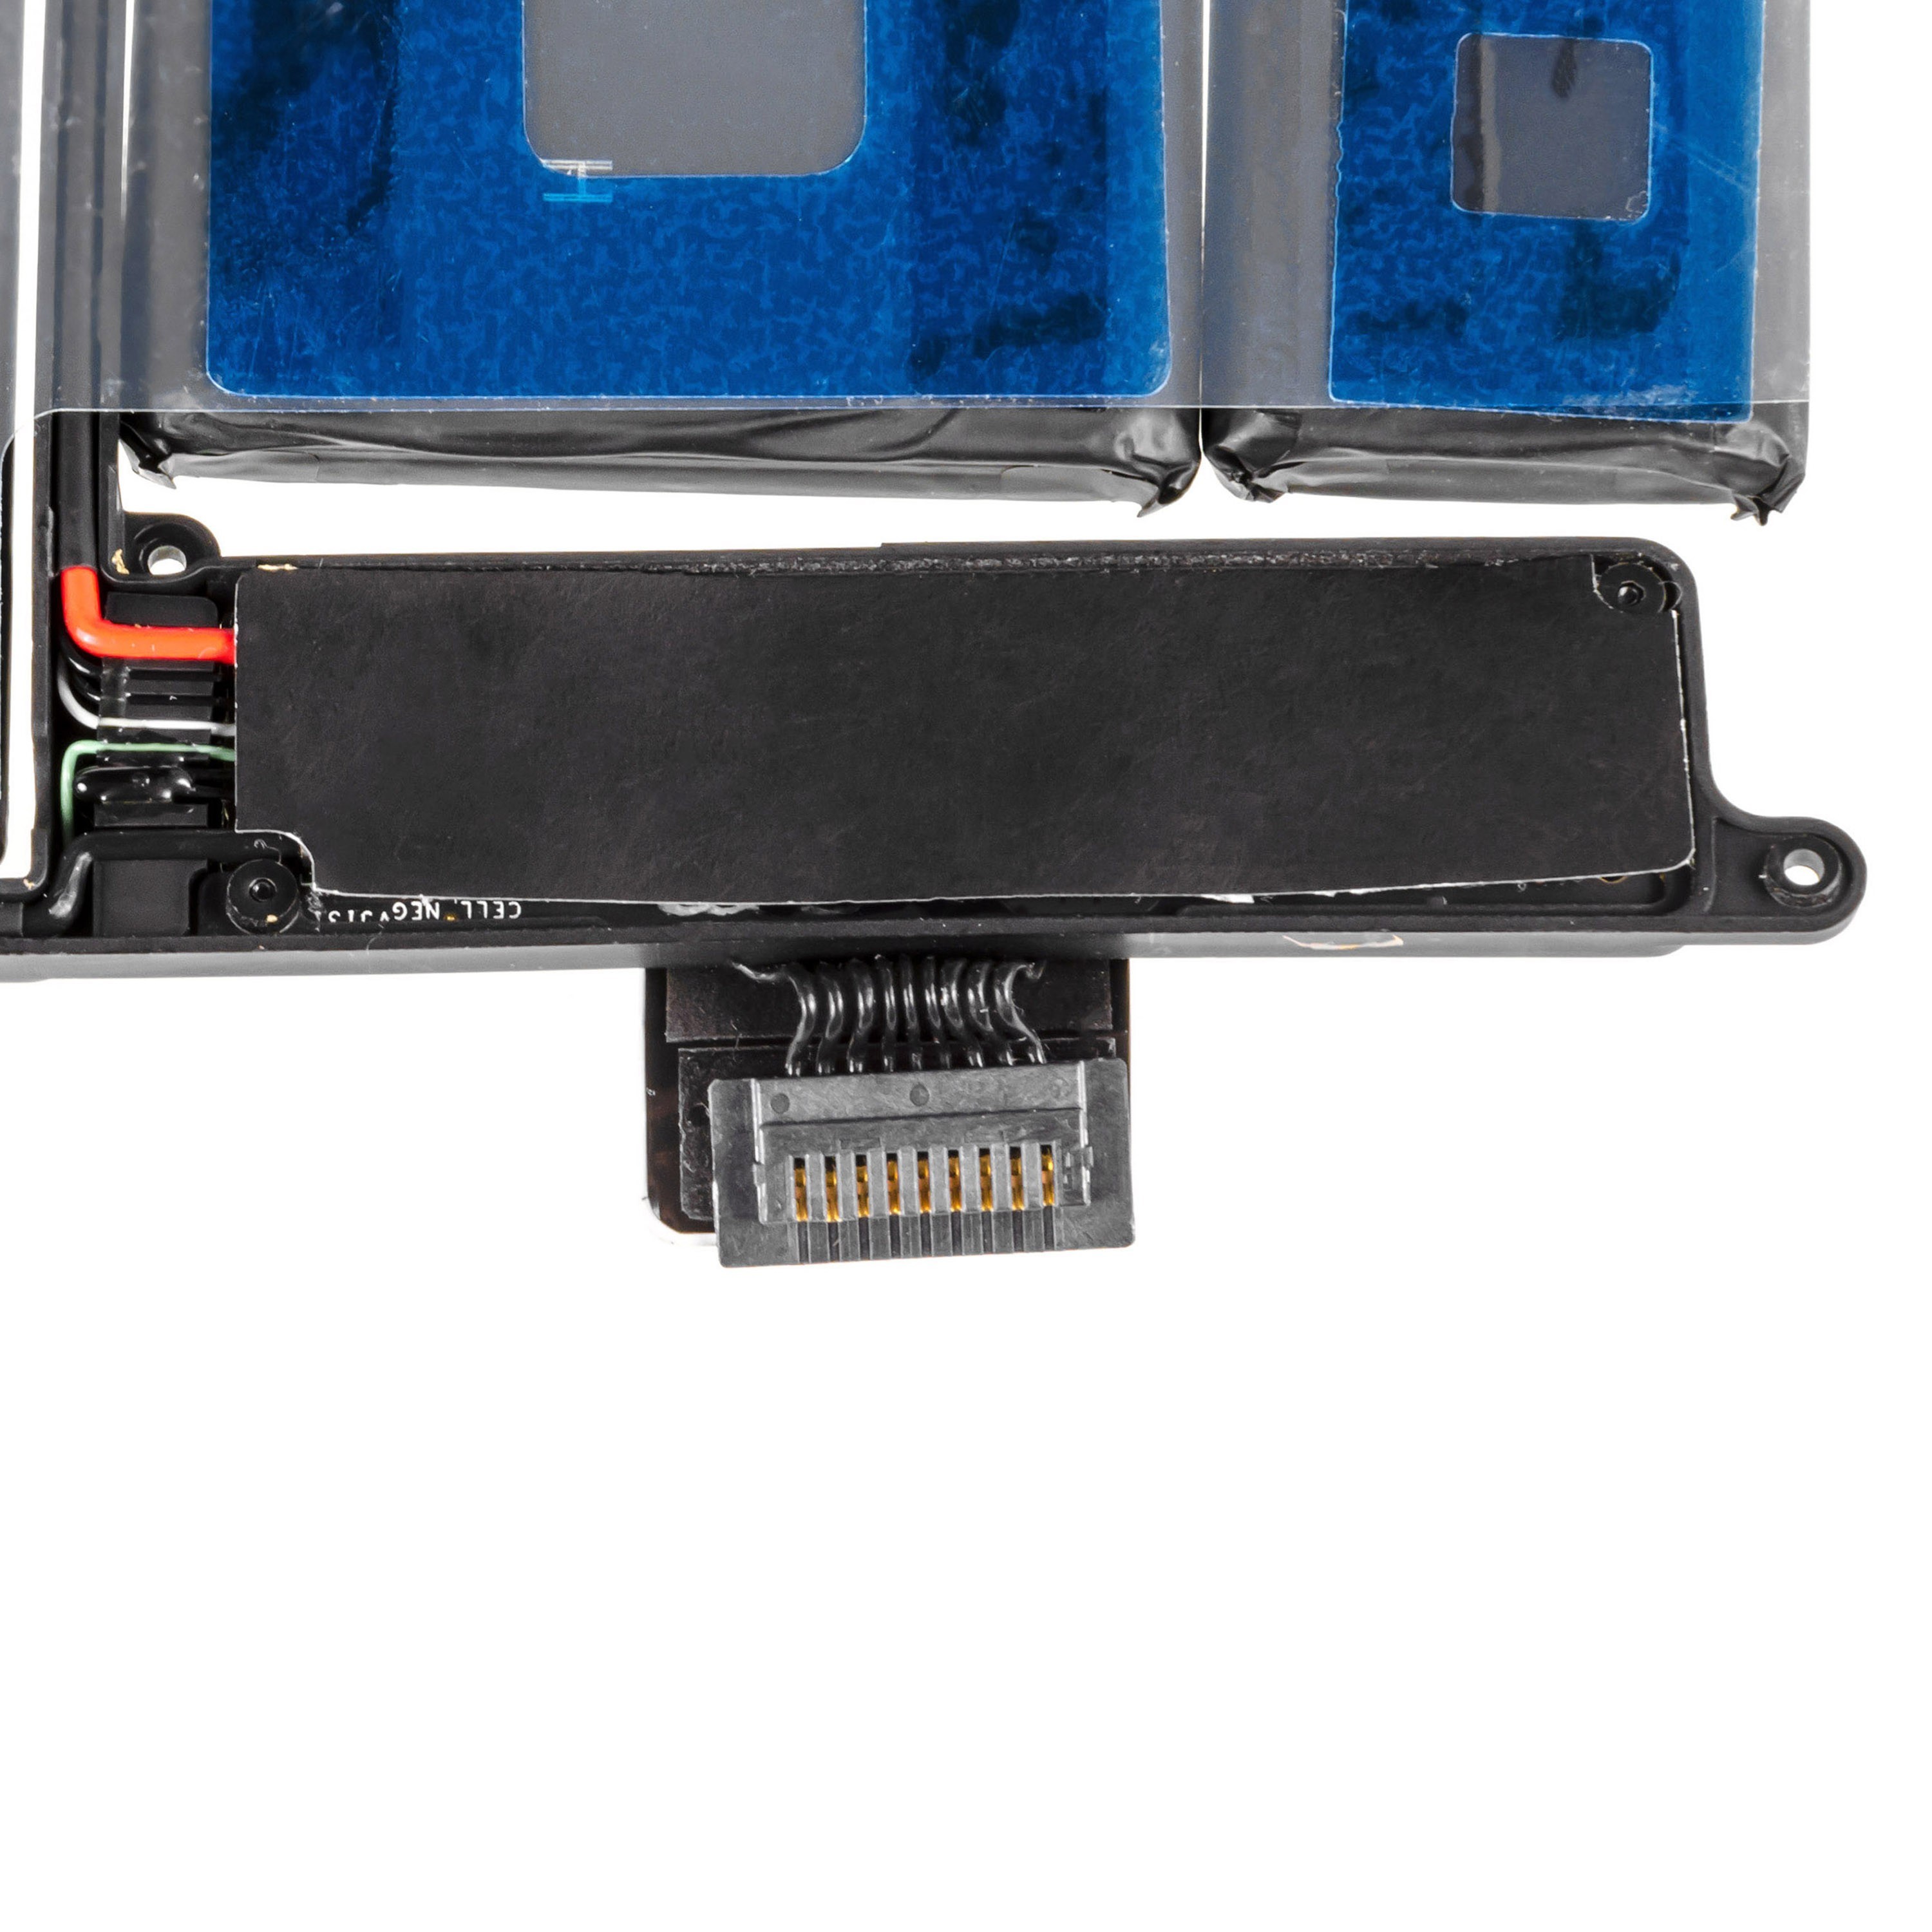 Green Cell PRO laptop batteri til Apple Macbook Pro 13 A1502 (Late 2013, Mid 2014)